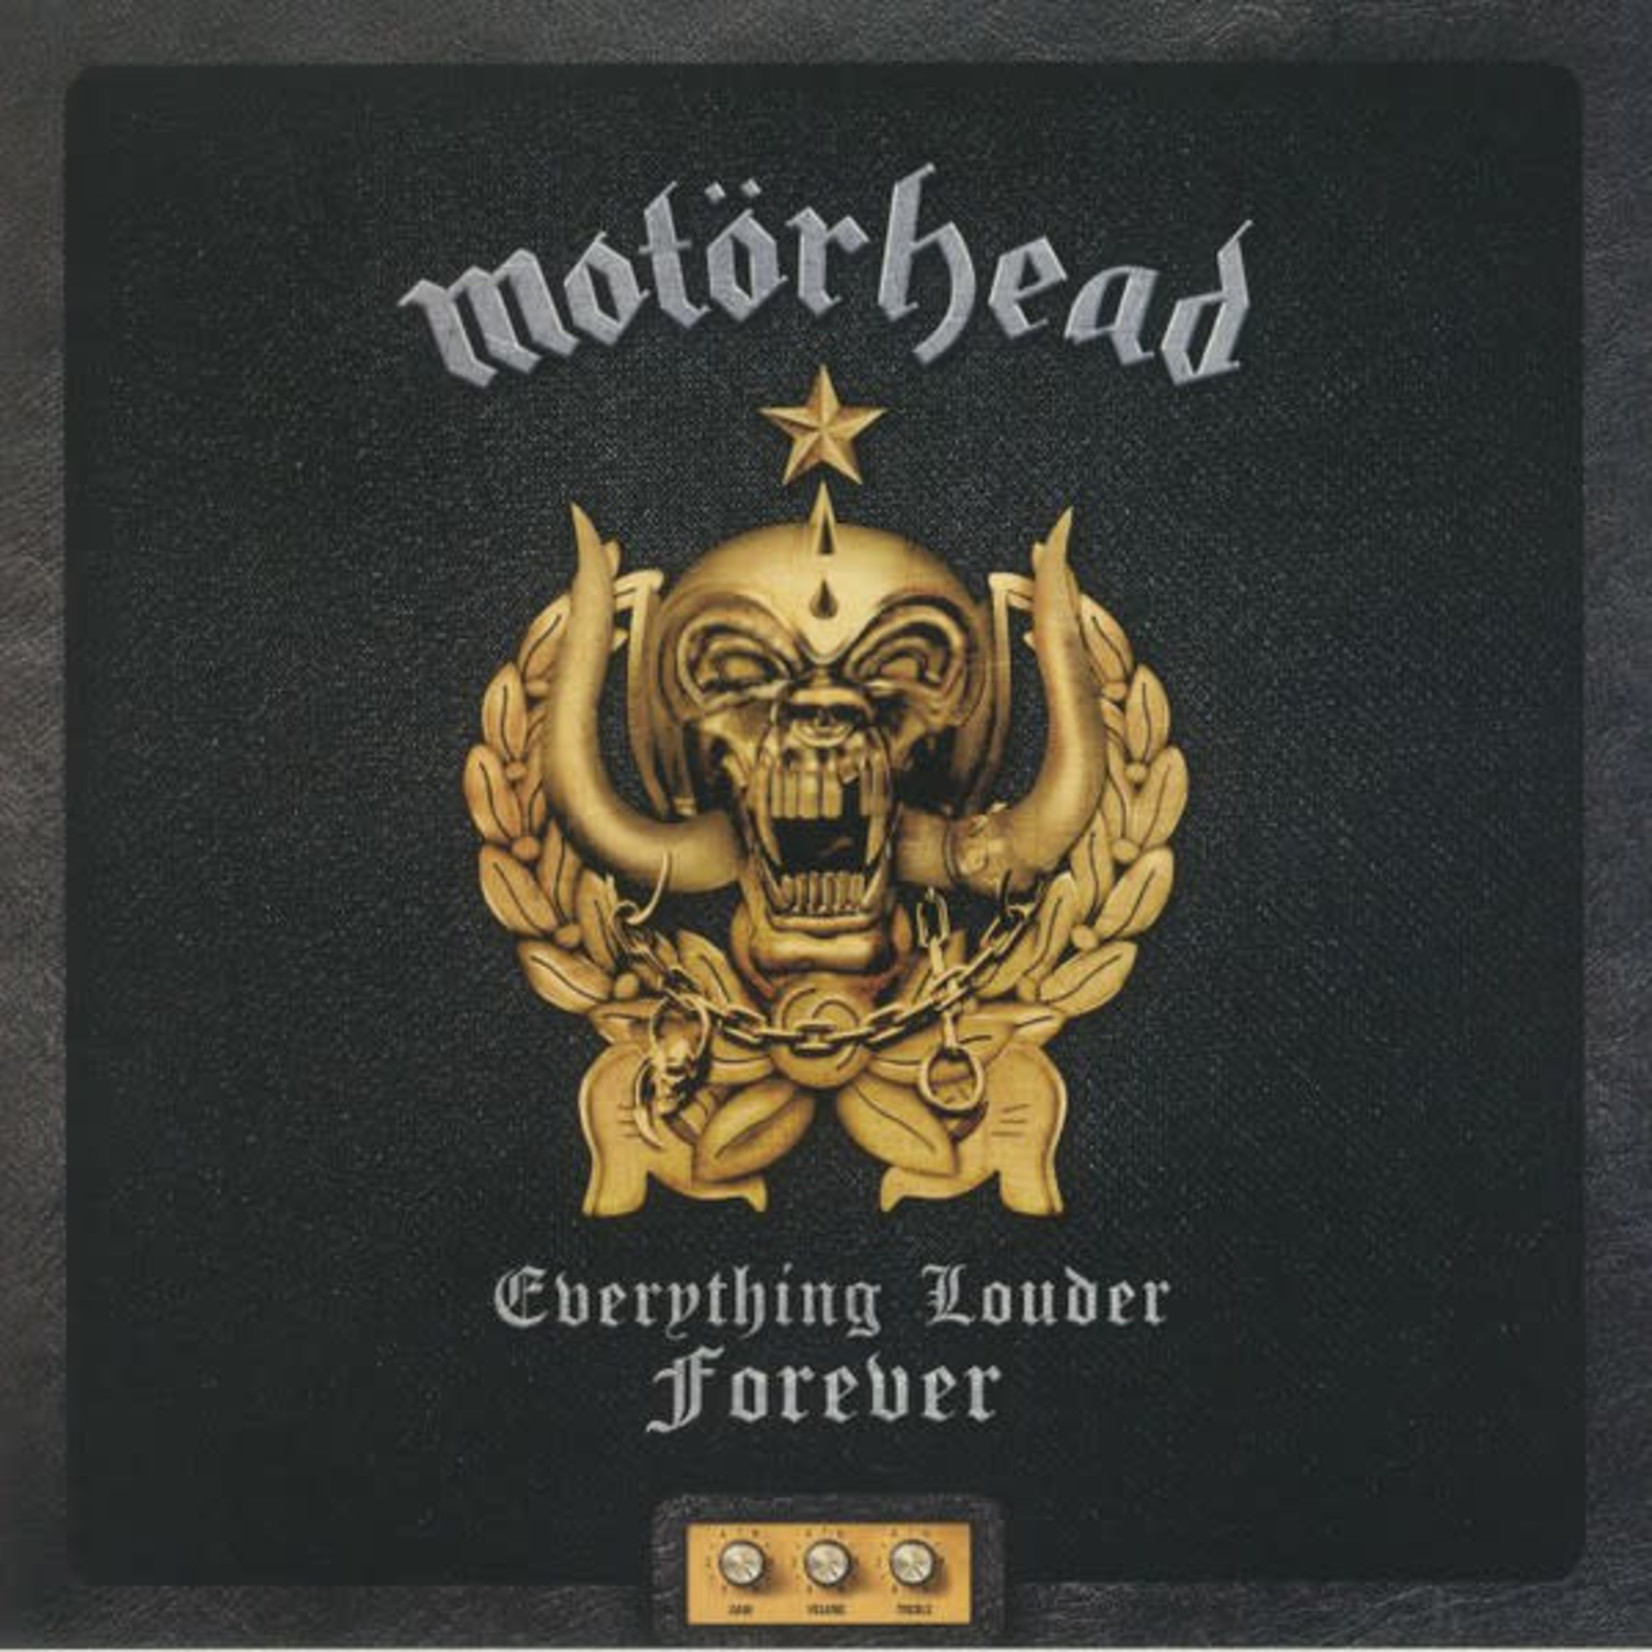 [New] Motorhead - Everything Louder Forever - The Very Best Of Motorhead (2LP)